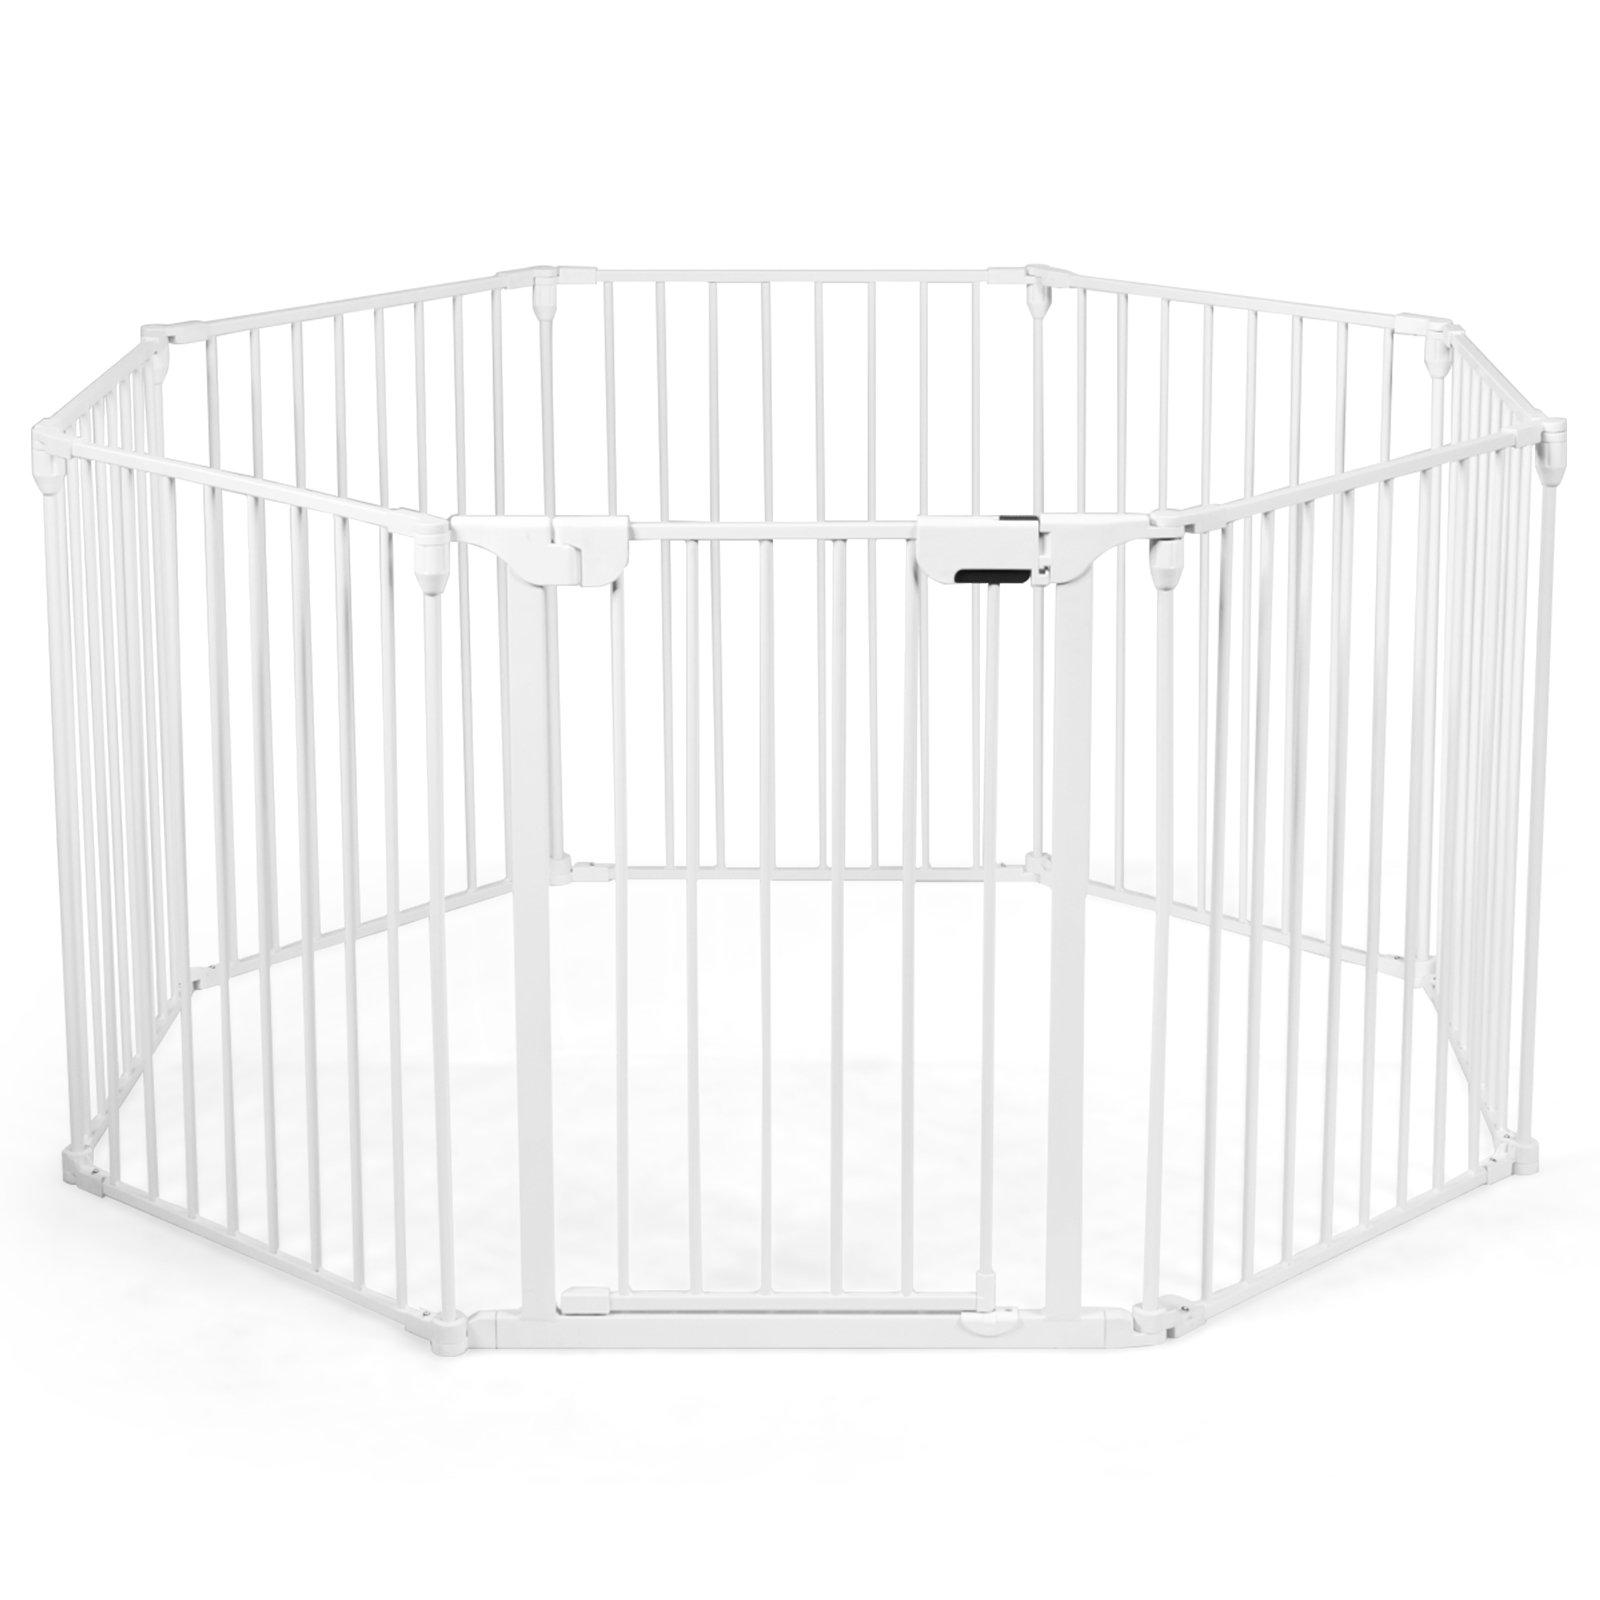 8 Panel Baby Metal PlayPen Pet Fence Playpen Foldable Room Divider 3 IN 1 White